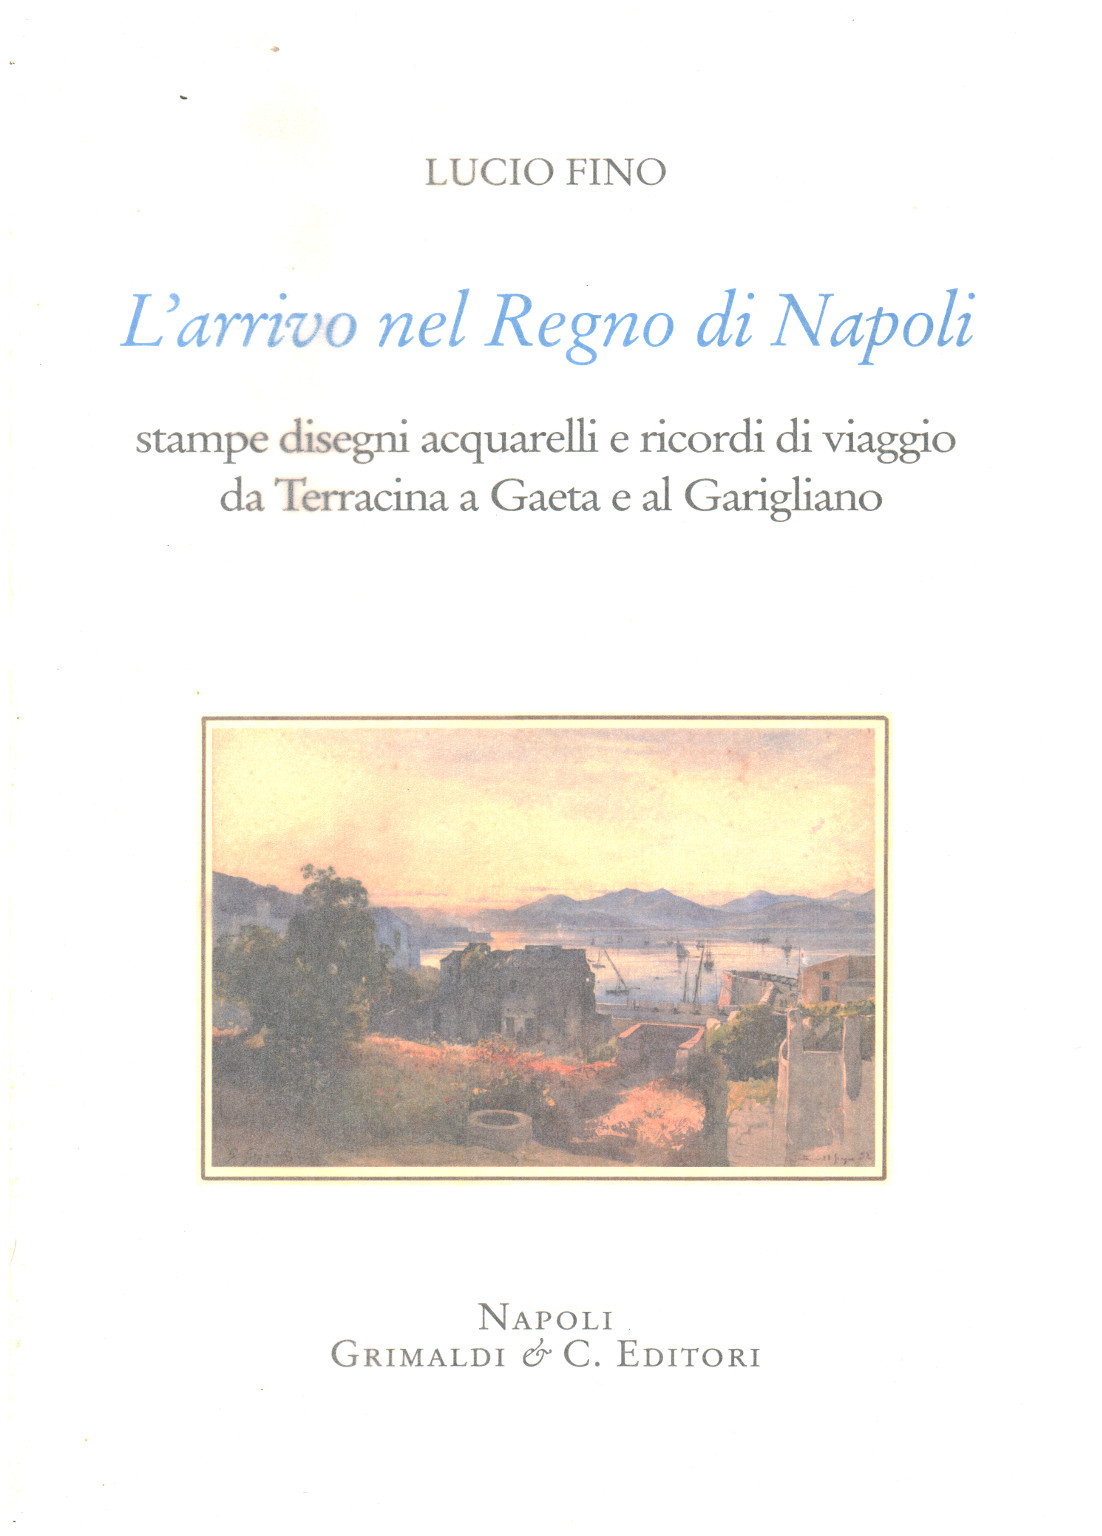 La llegada al Reino de Nápoles, s.a.